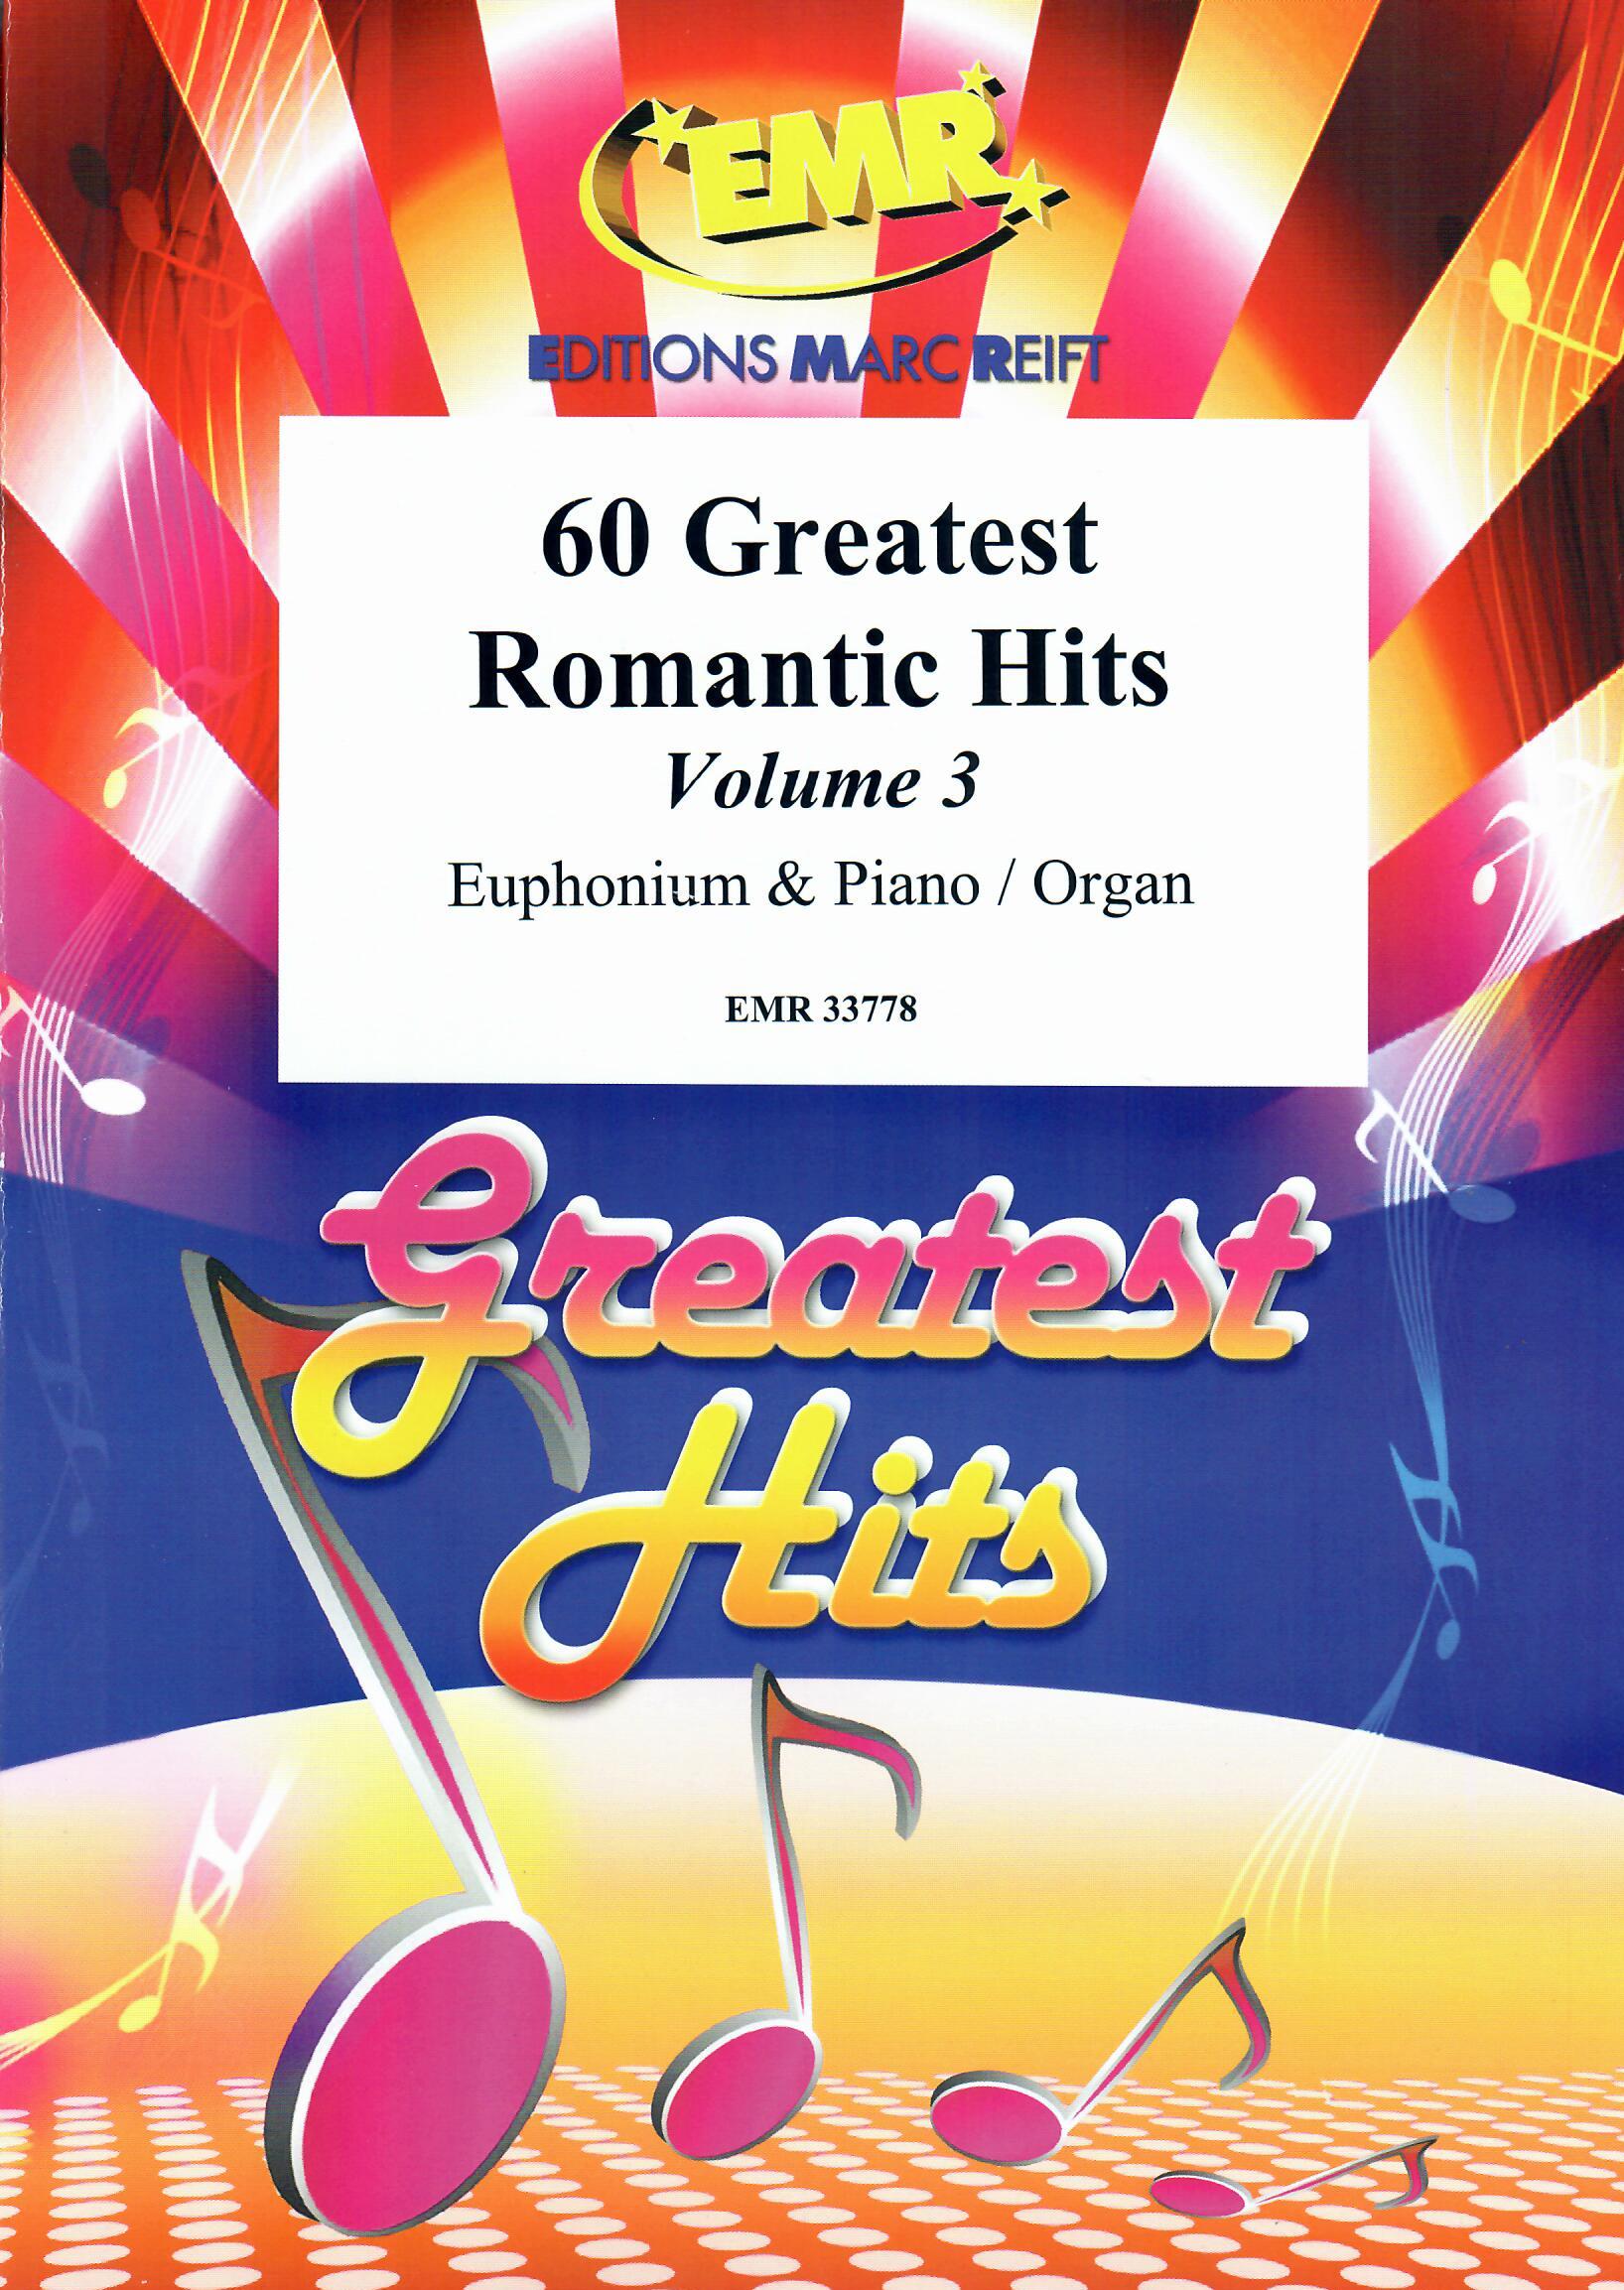 60 GREATEST ROMANTIC HITS VOLUME 3, SOLOS - Euphonium